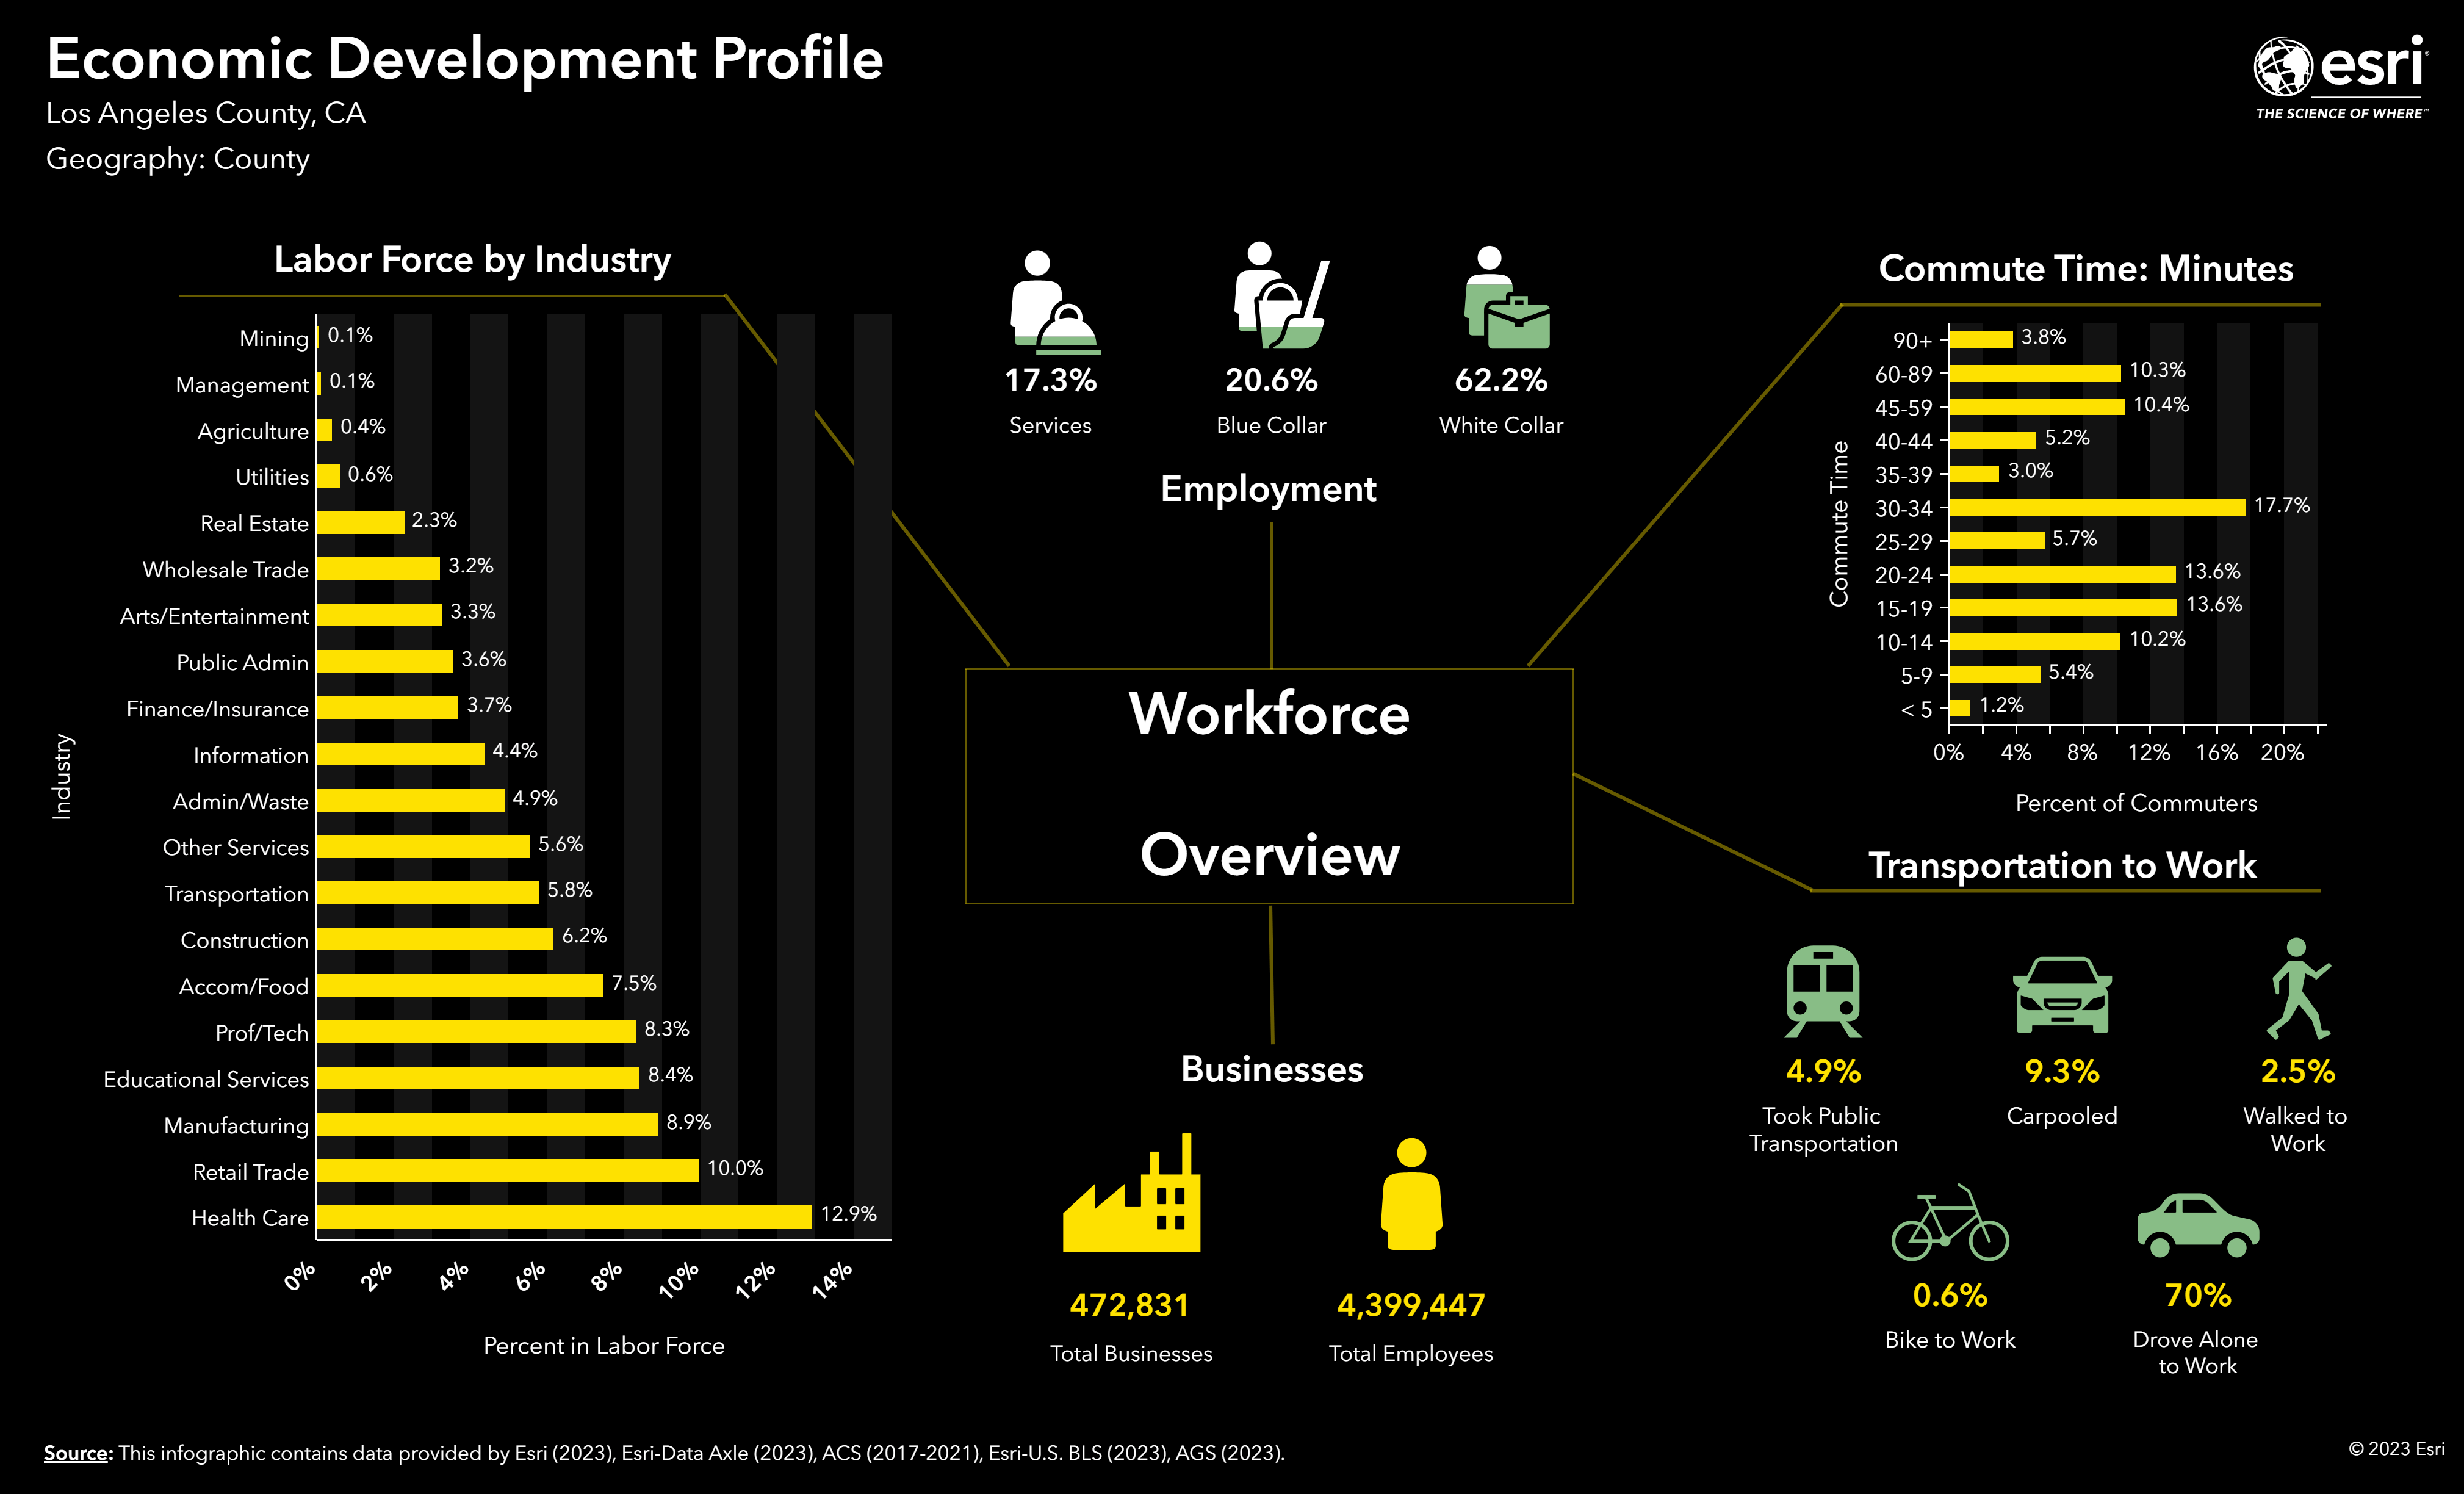 Economic Development Profile infographic, page 1